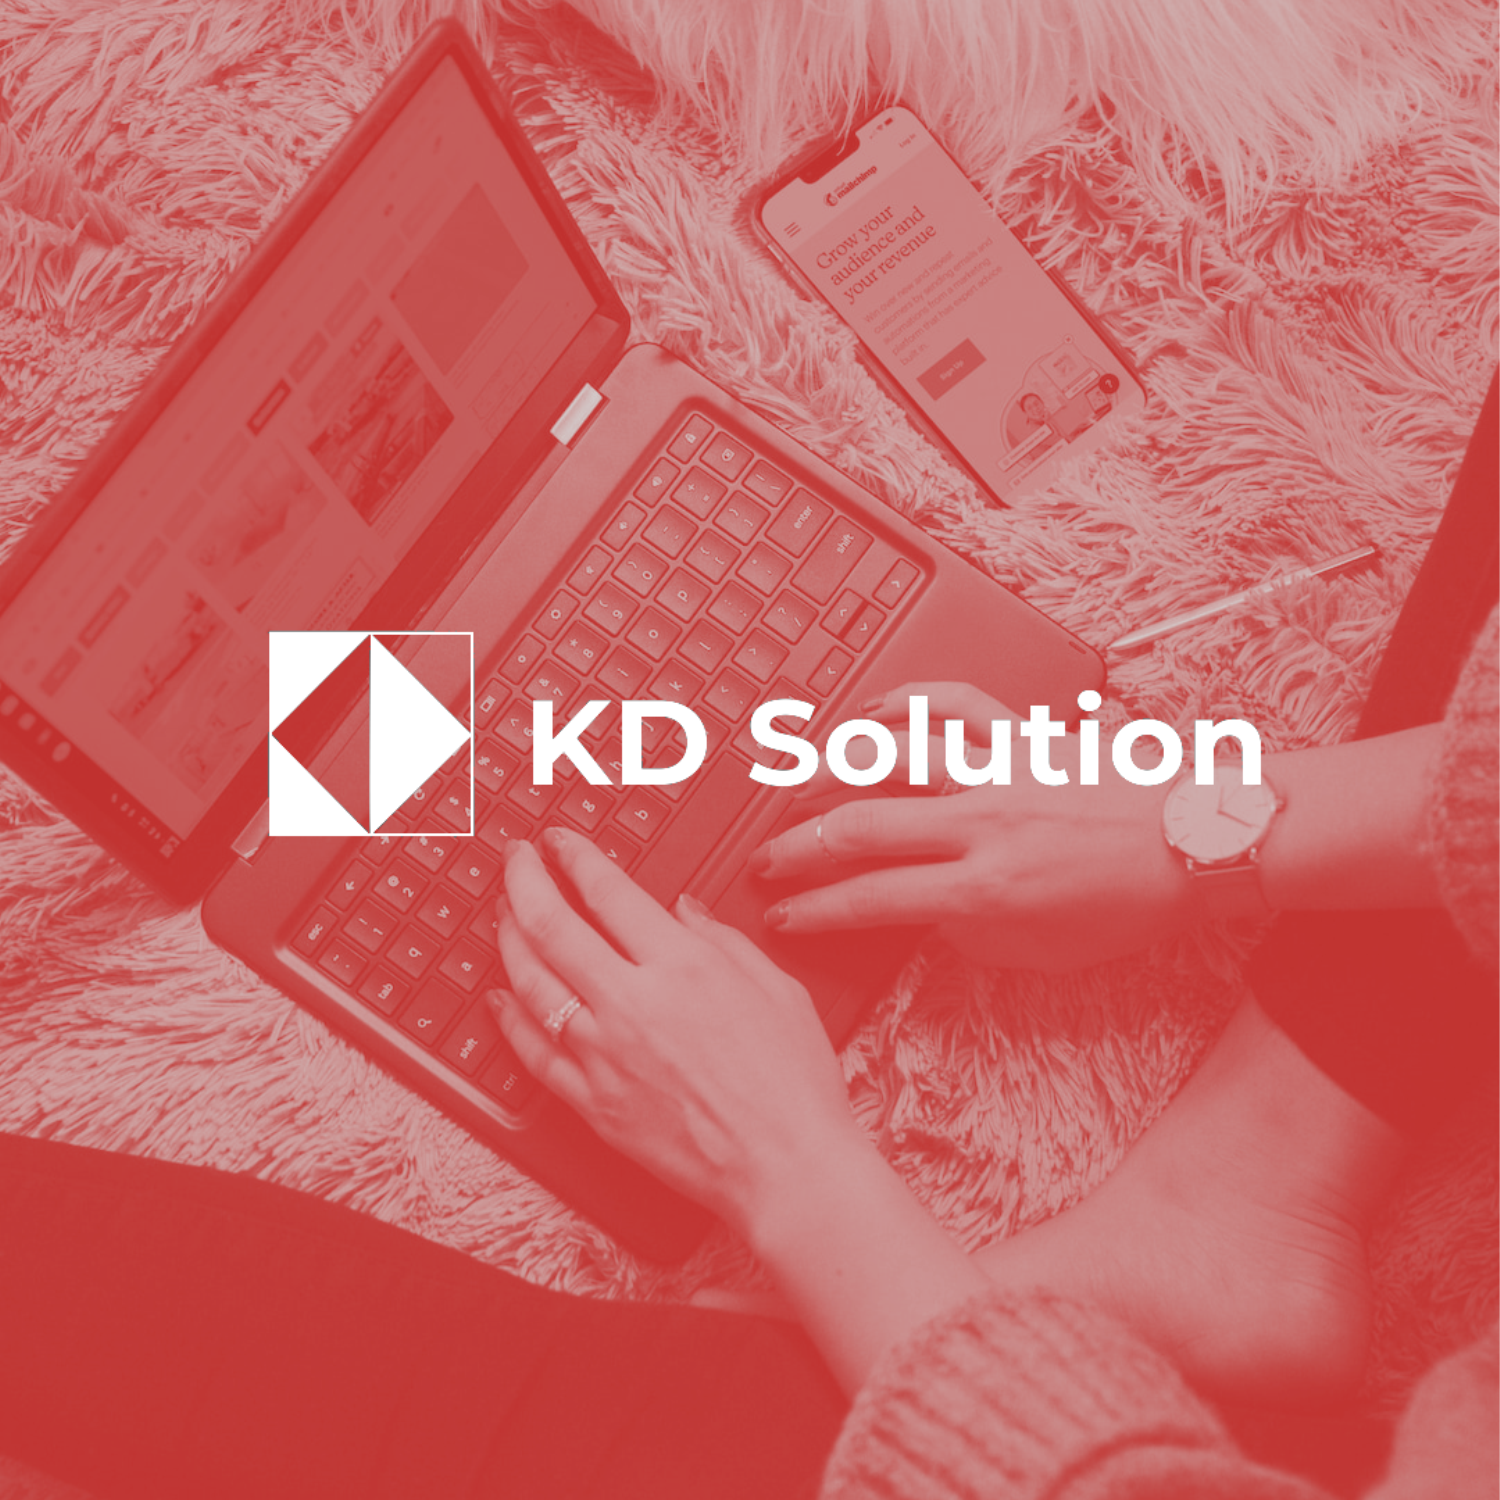 KD-solution Branding Start up visuel - Vanhuffel